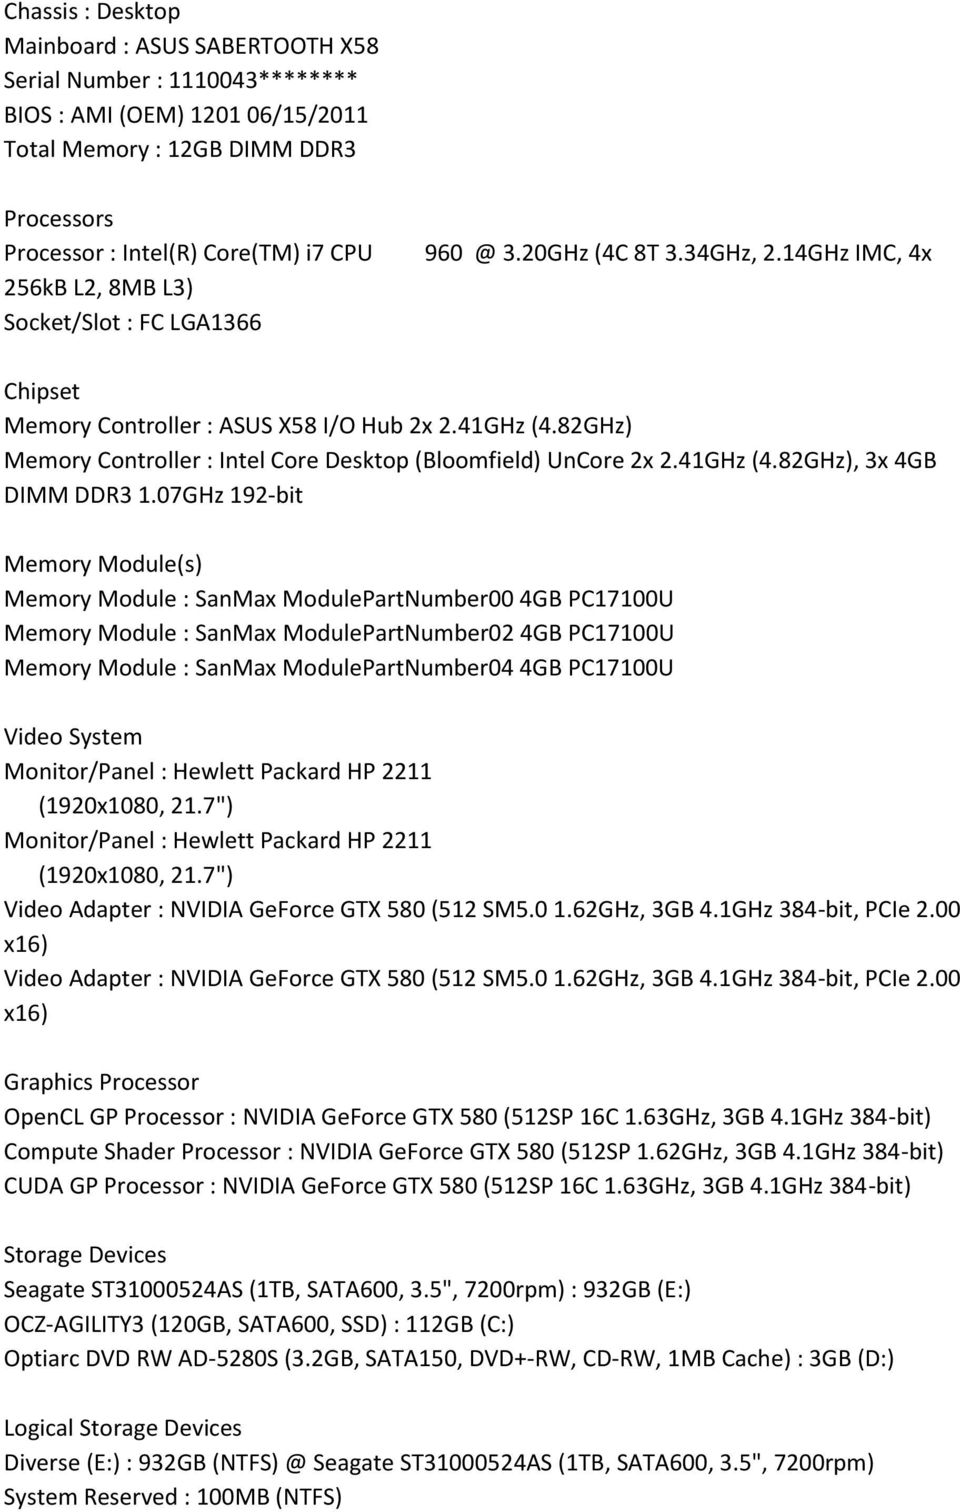 82GHz) Memory Controller : Intel Core Desktop (Bloomfield) UnCore 2x 2.41GHz (4.82GHz), 3x 4GB DIMM DDR3 1.